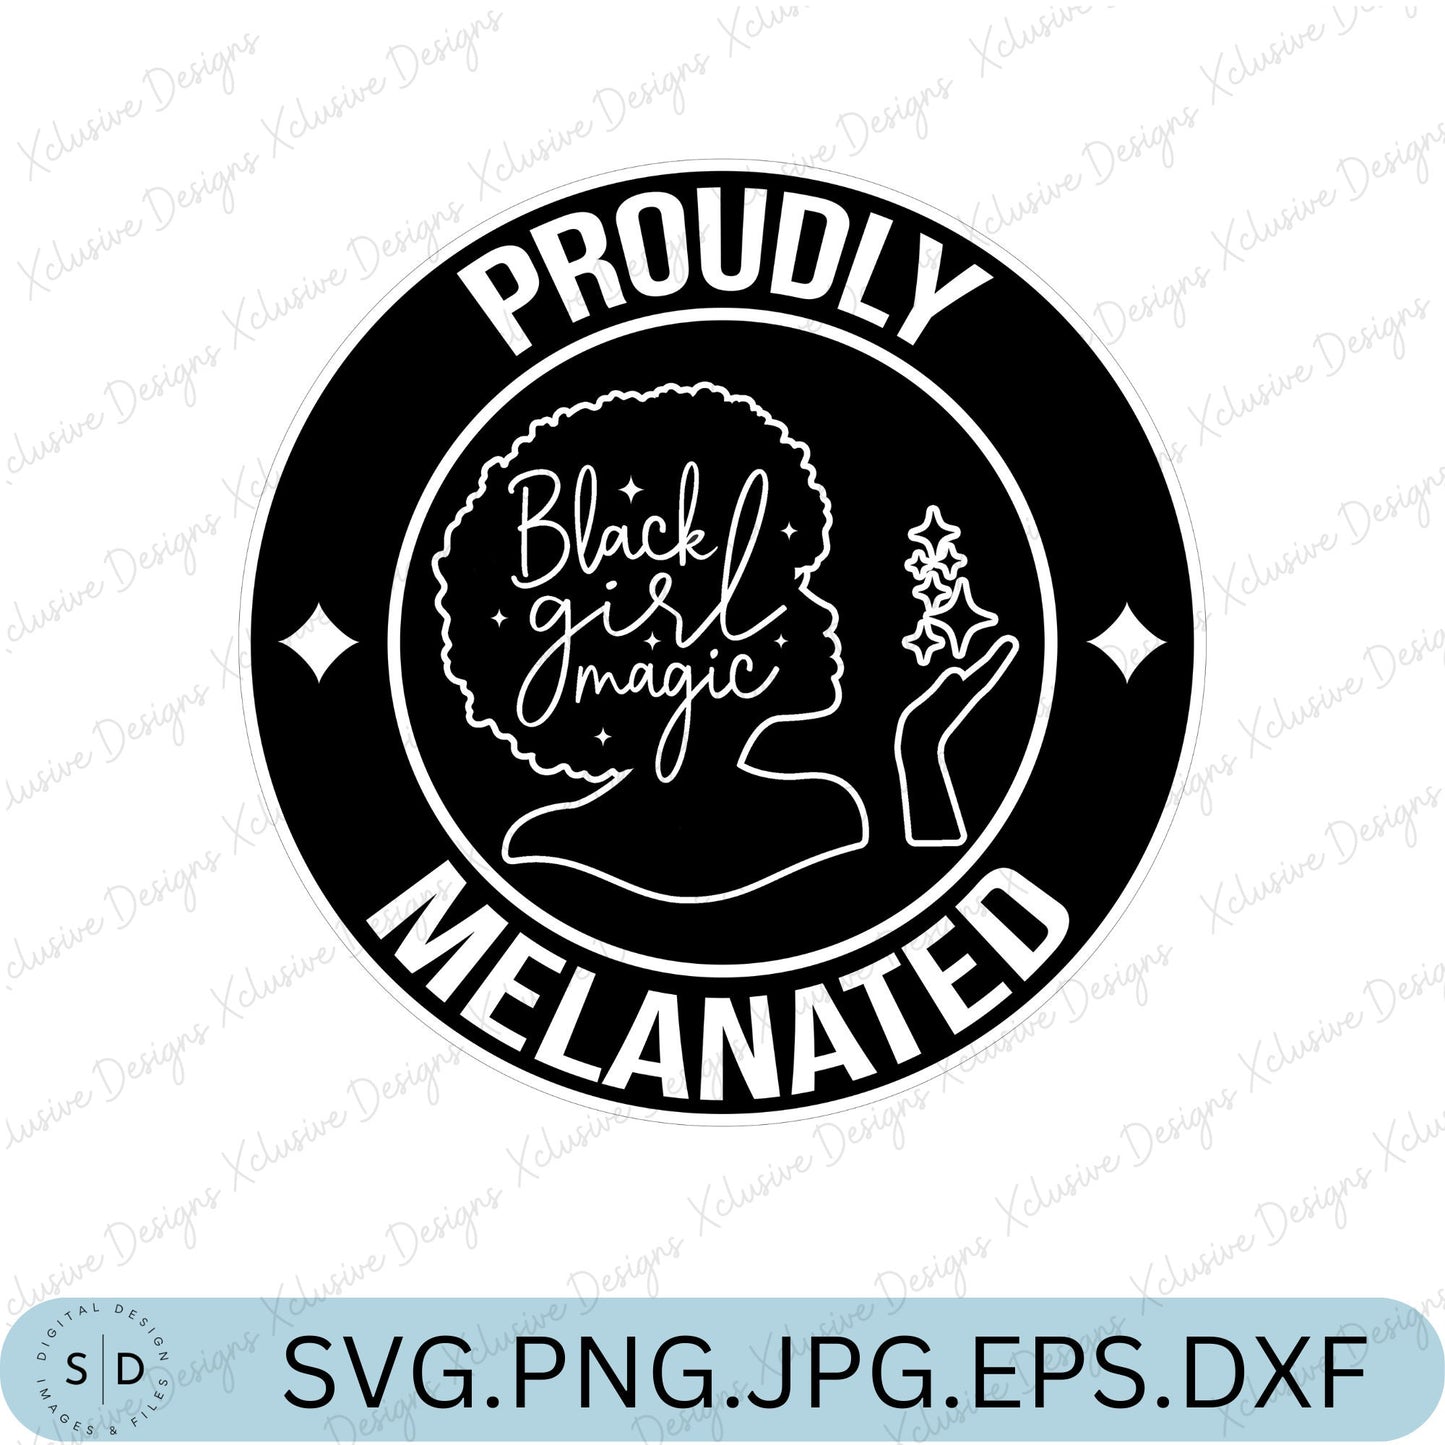 Proudly Melanated Black Girl Magic SVG